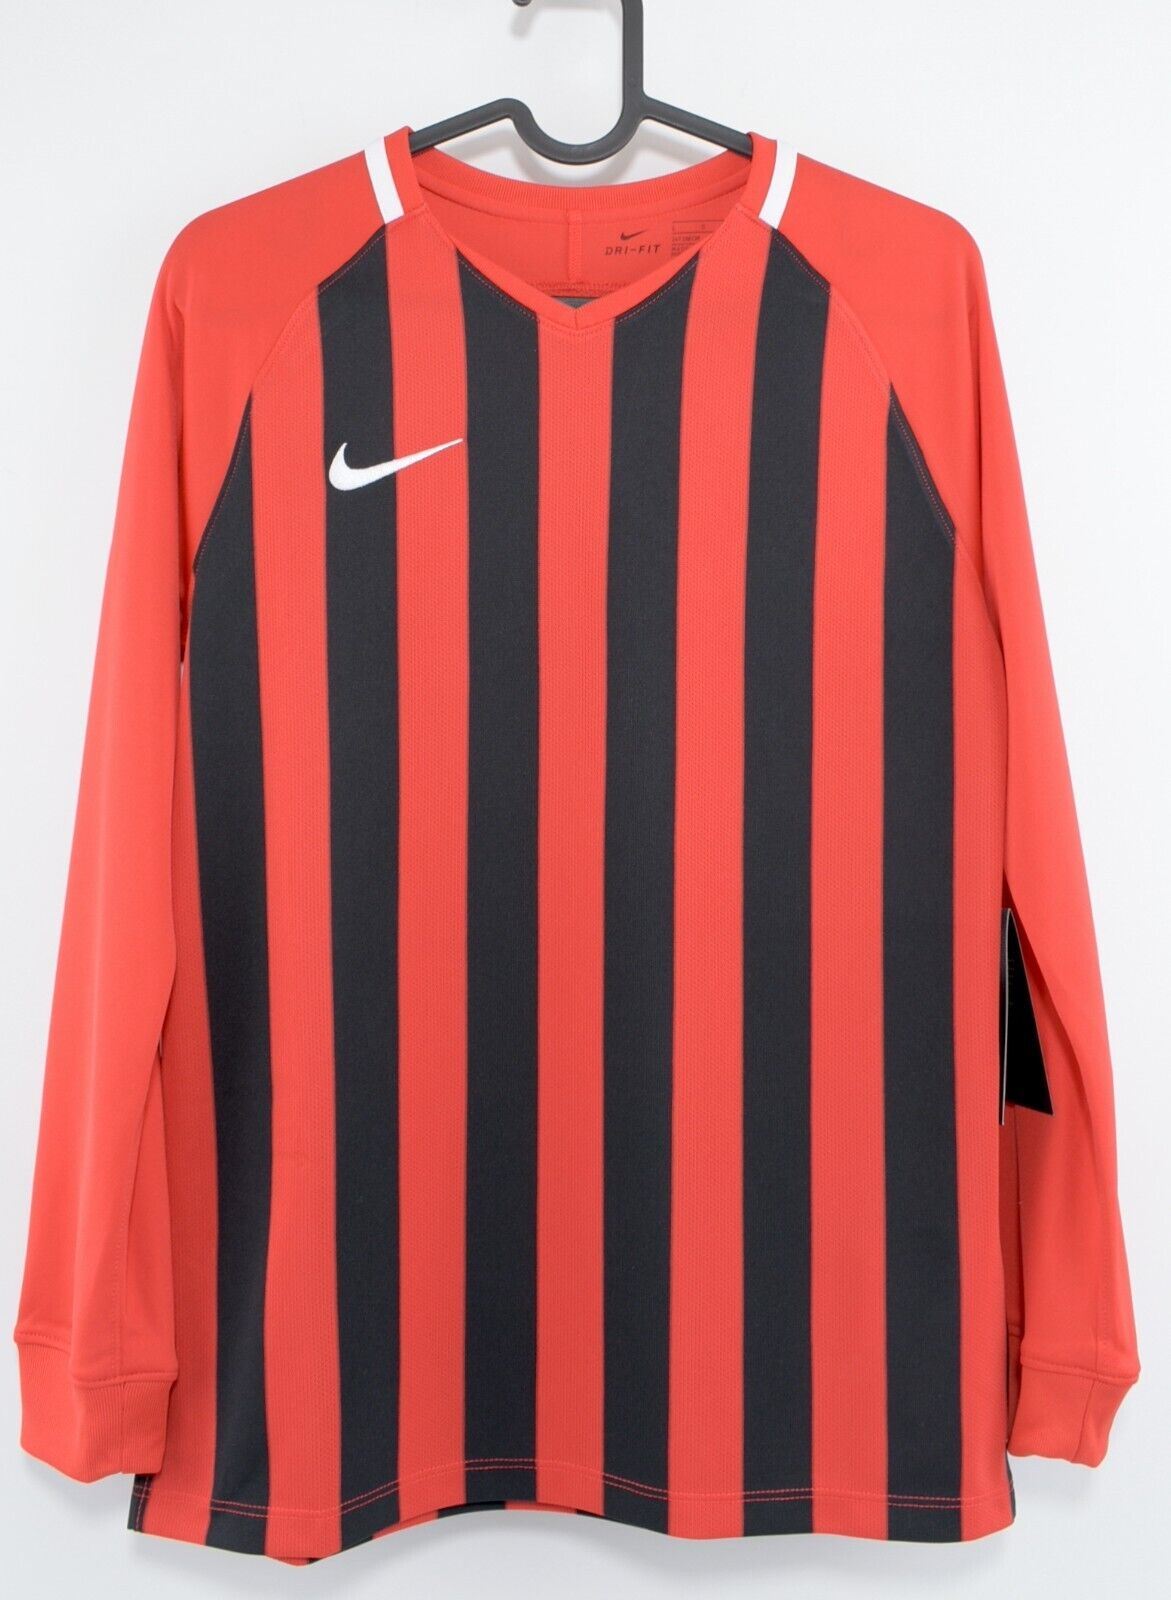 NIKE Boys Kids Long Sleeve Football Jersey, Red/Black Striped, size 11-12 years